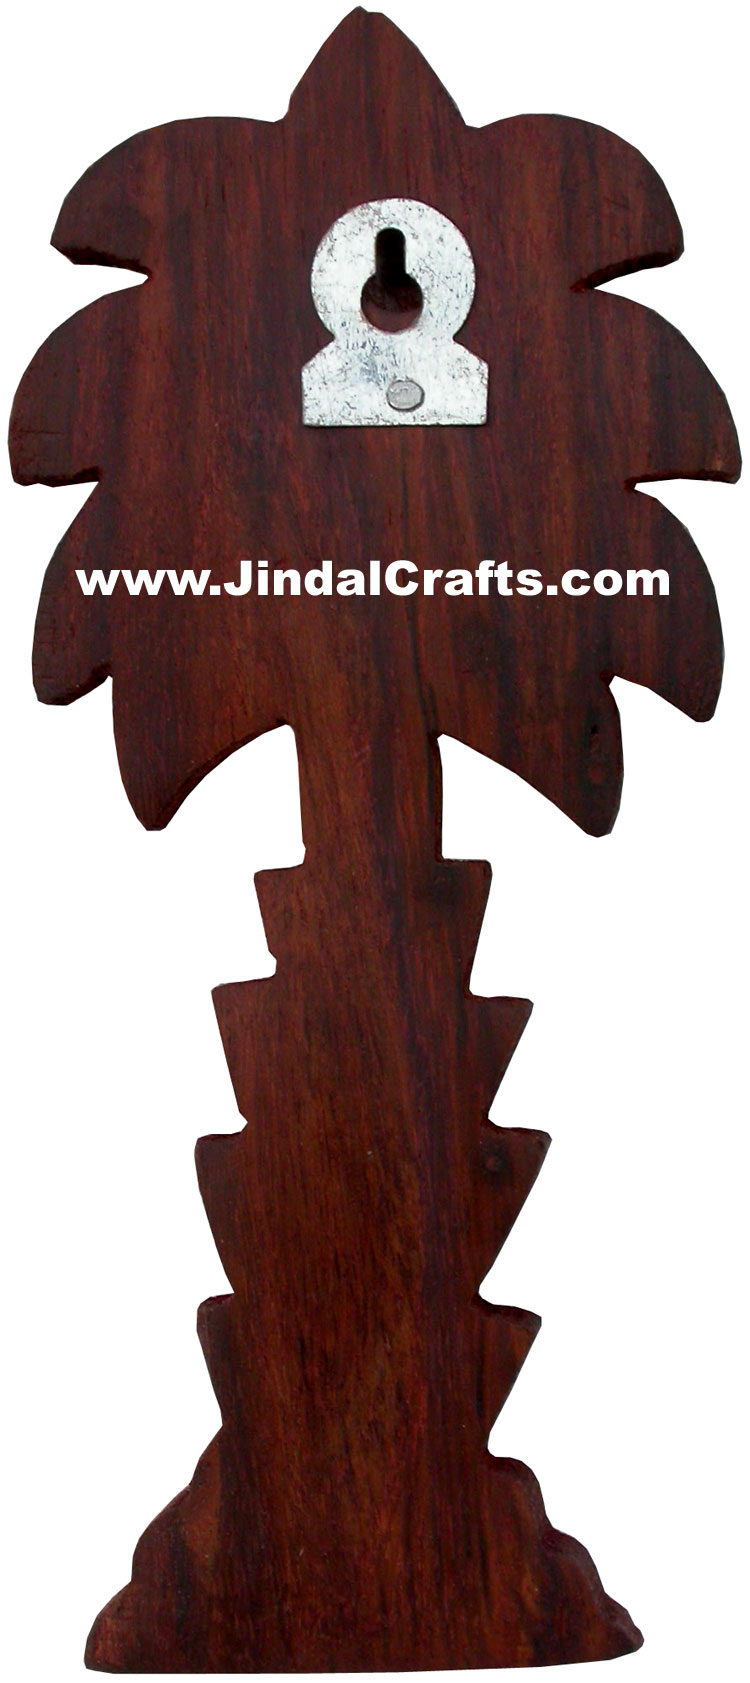 Handcarved Wooden Brass Inlay Key Holder Home Decor Traditional Handicraft Craft